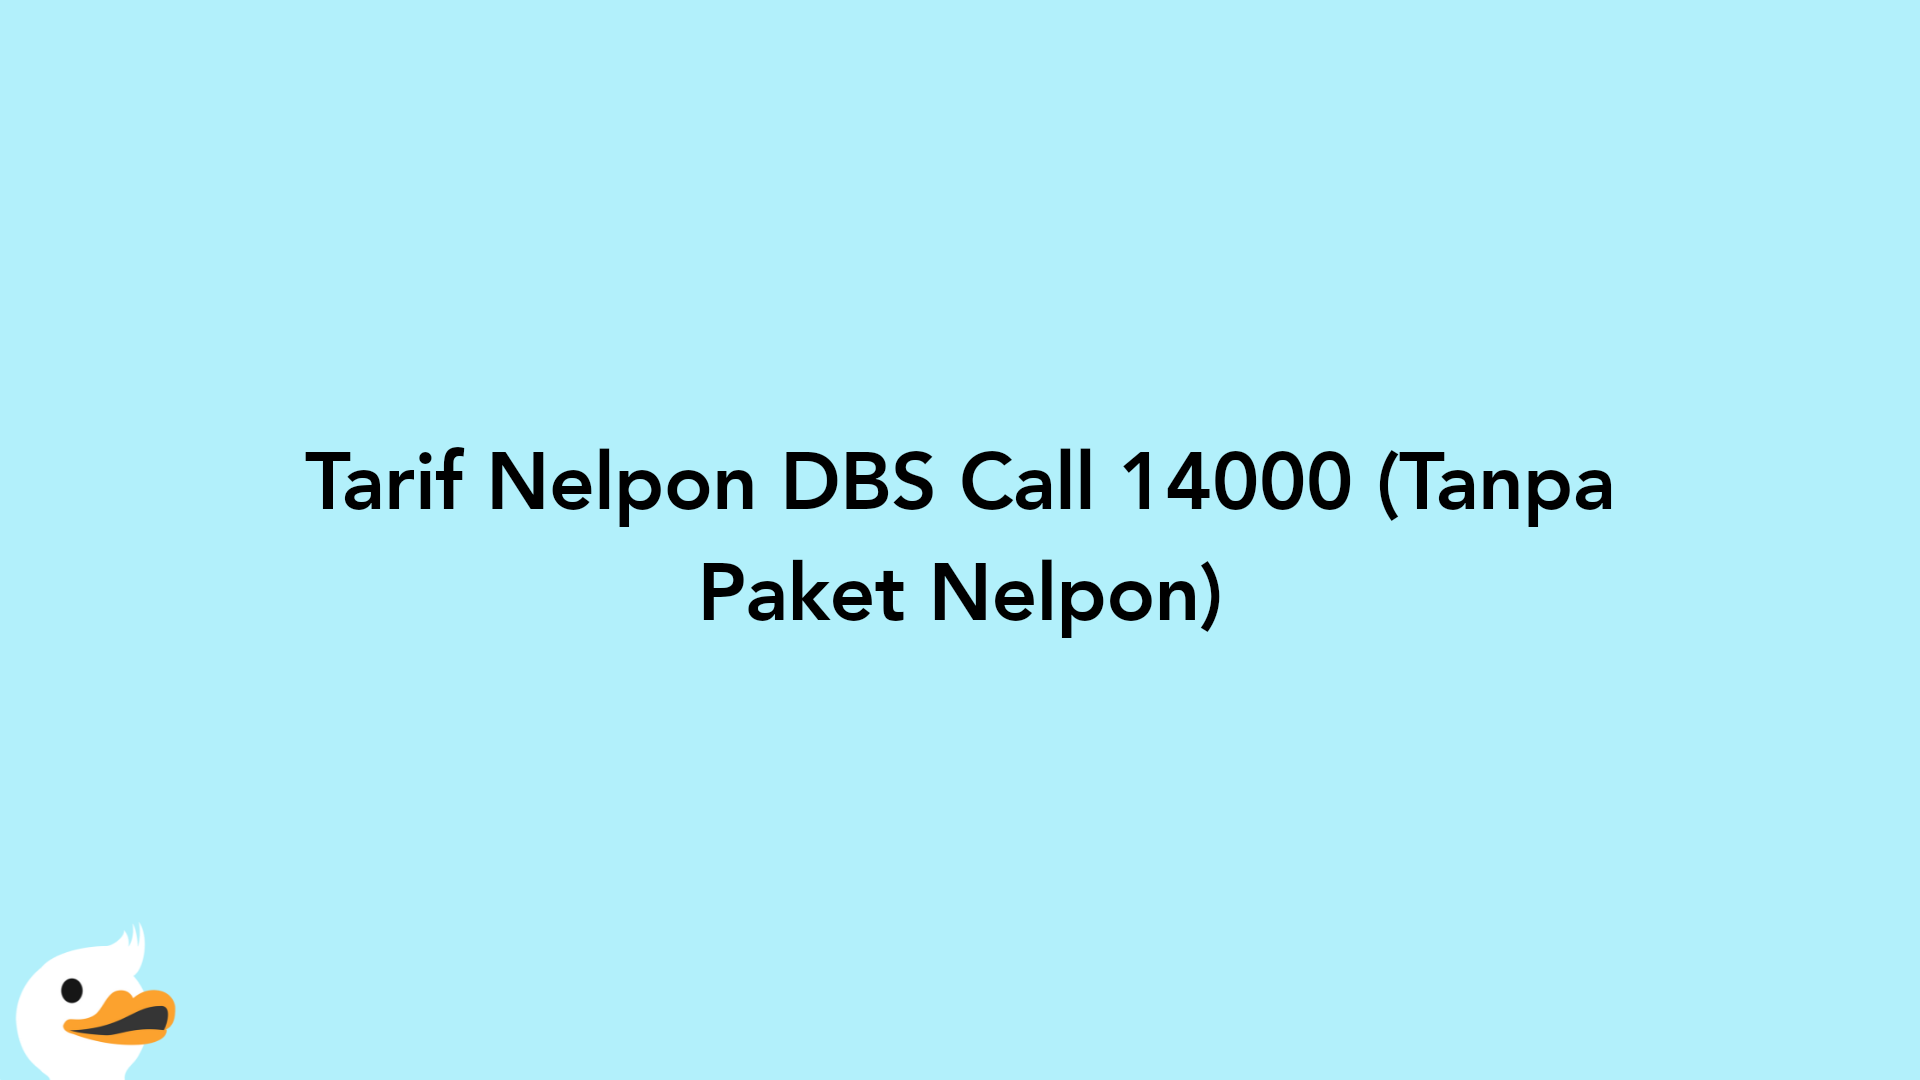 Tarif Nelpon DBS Call 14000 (Tanpa Paket Nelpon)